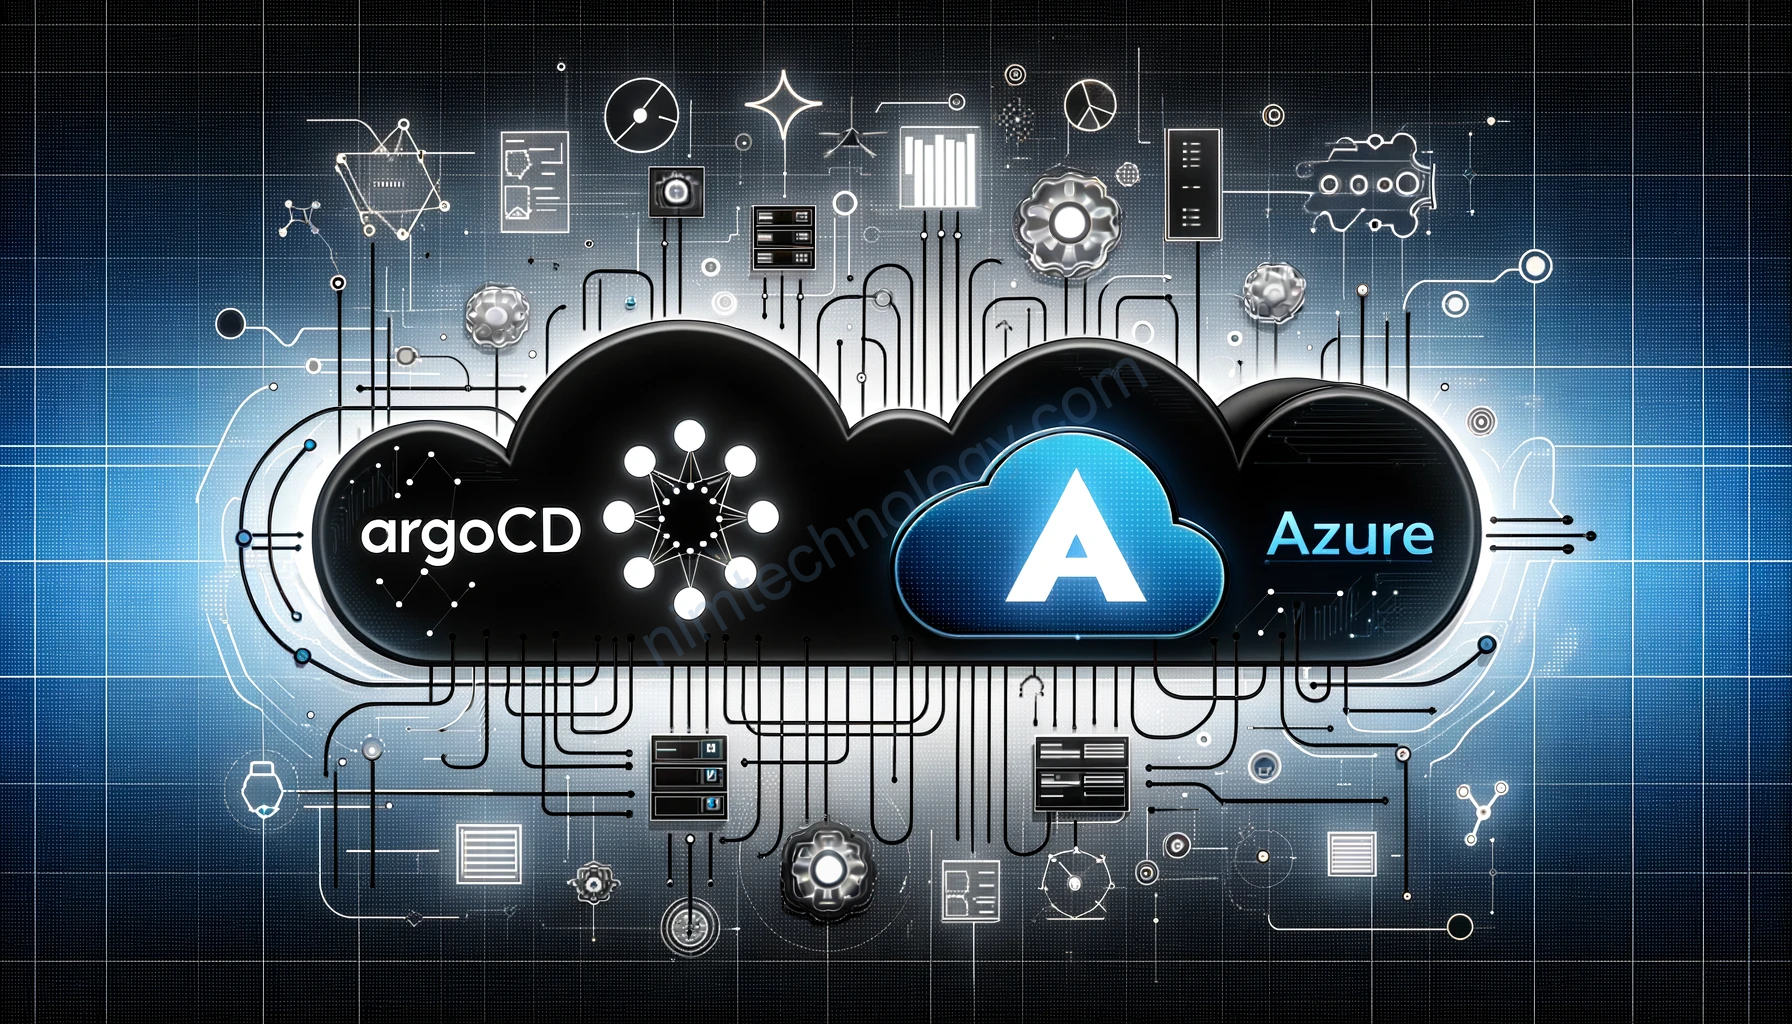 [Argocd – Azure] Login to ArgoCD using Microsoft or Azure Accounts.